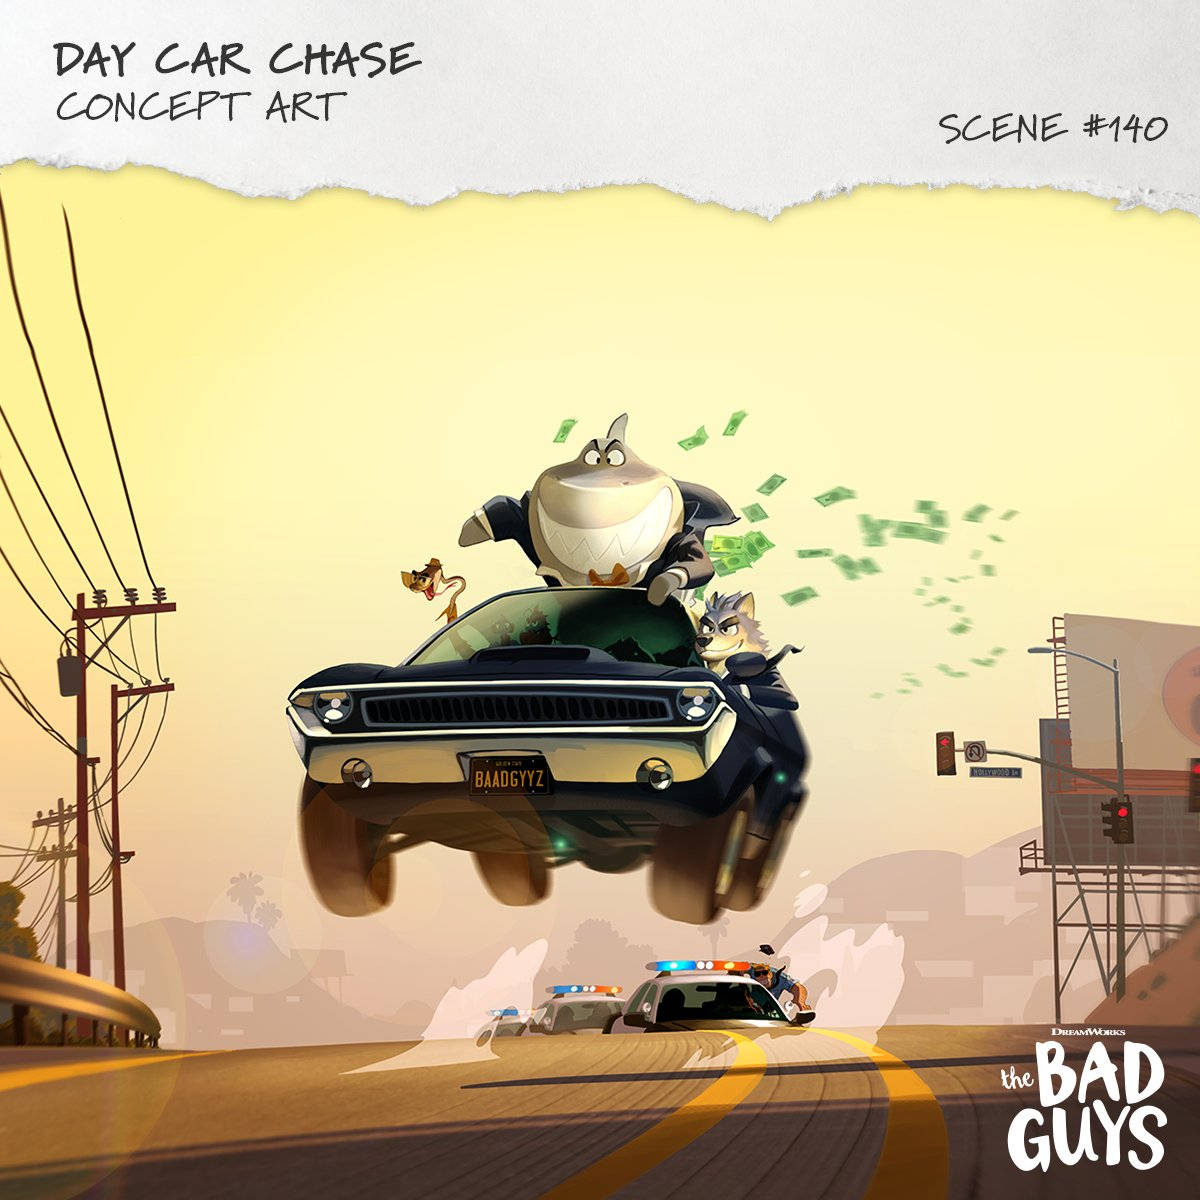 The Bad Guys Car Chase Scene